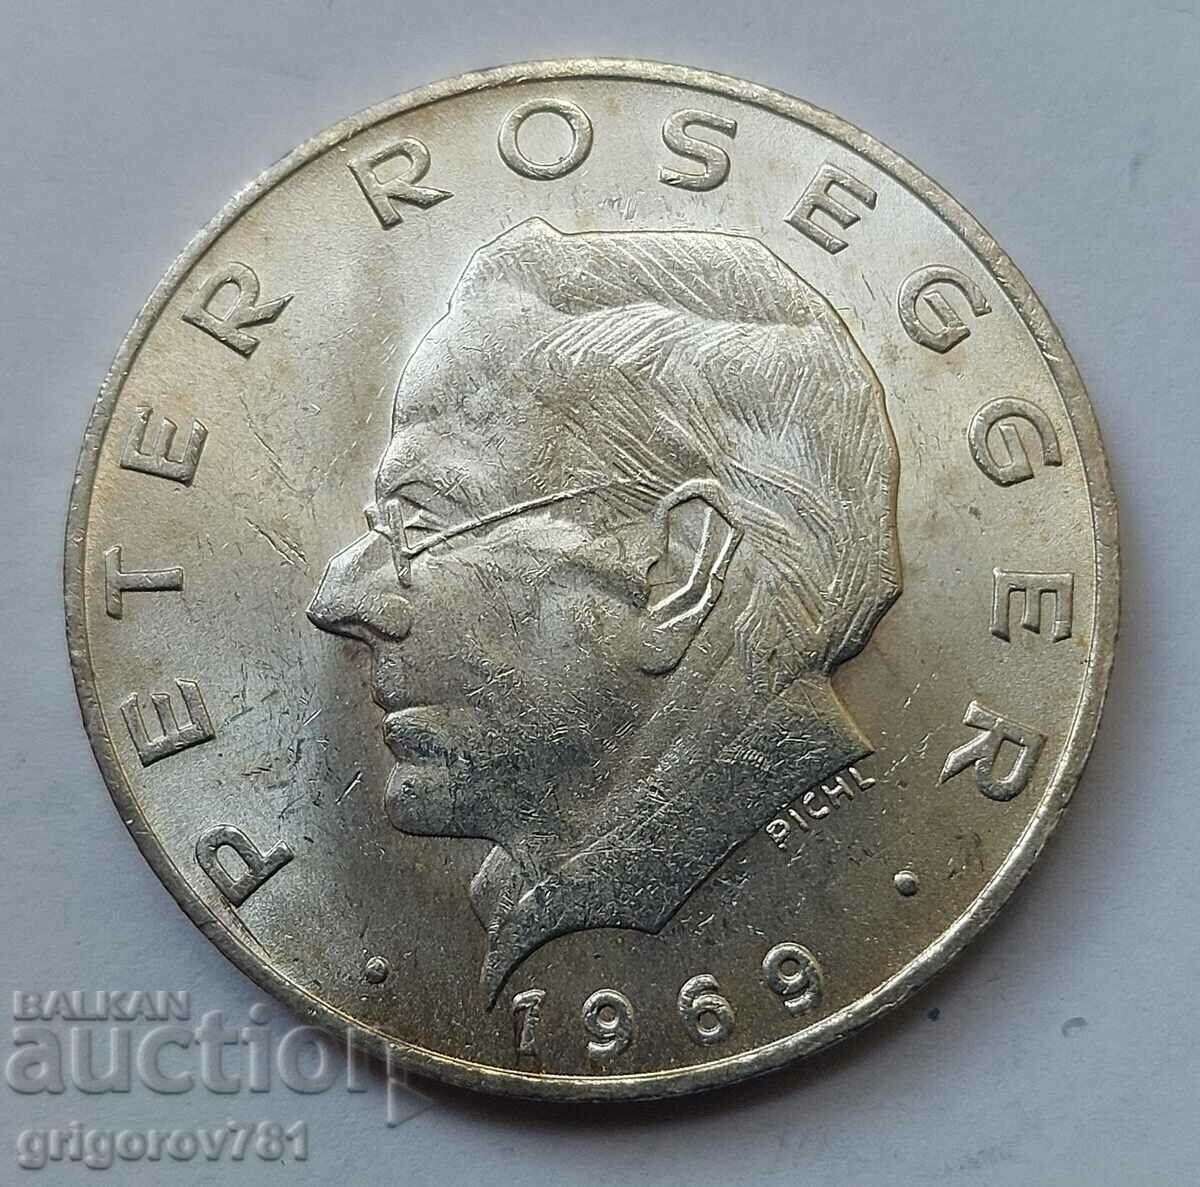 25 Shillings Silver Austria 1969 - Silver Coin #28